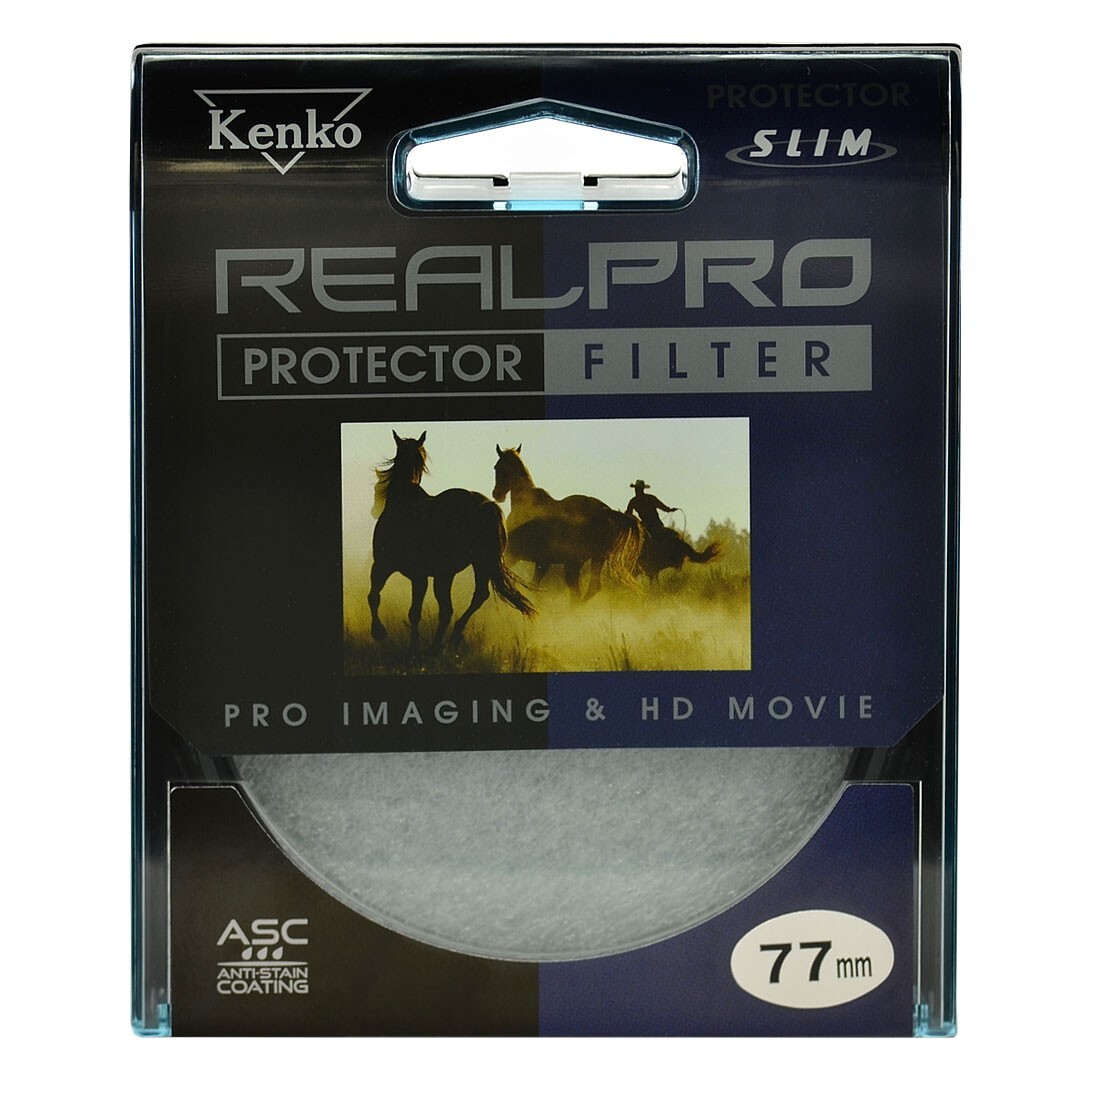 Фильтр Kenko 49s real Pro UV. Kenko кофе. +Kenko +REALPRO +UV +82mm +светофильтр купить. +Kenko +ZX +Protector купить. Really protect